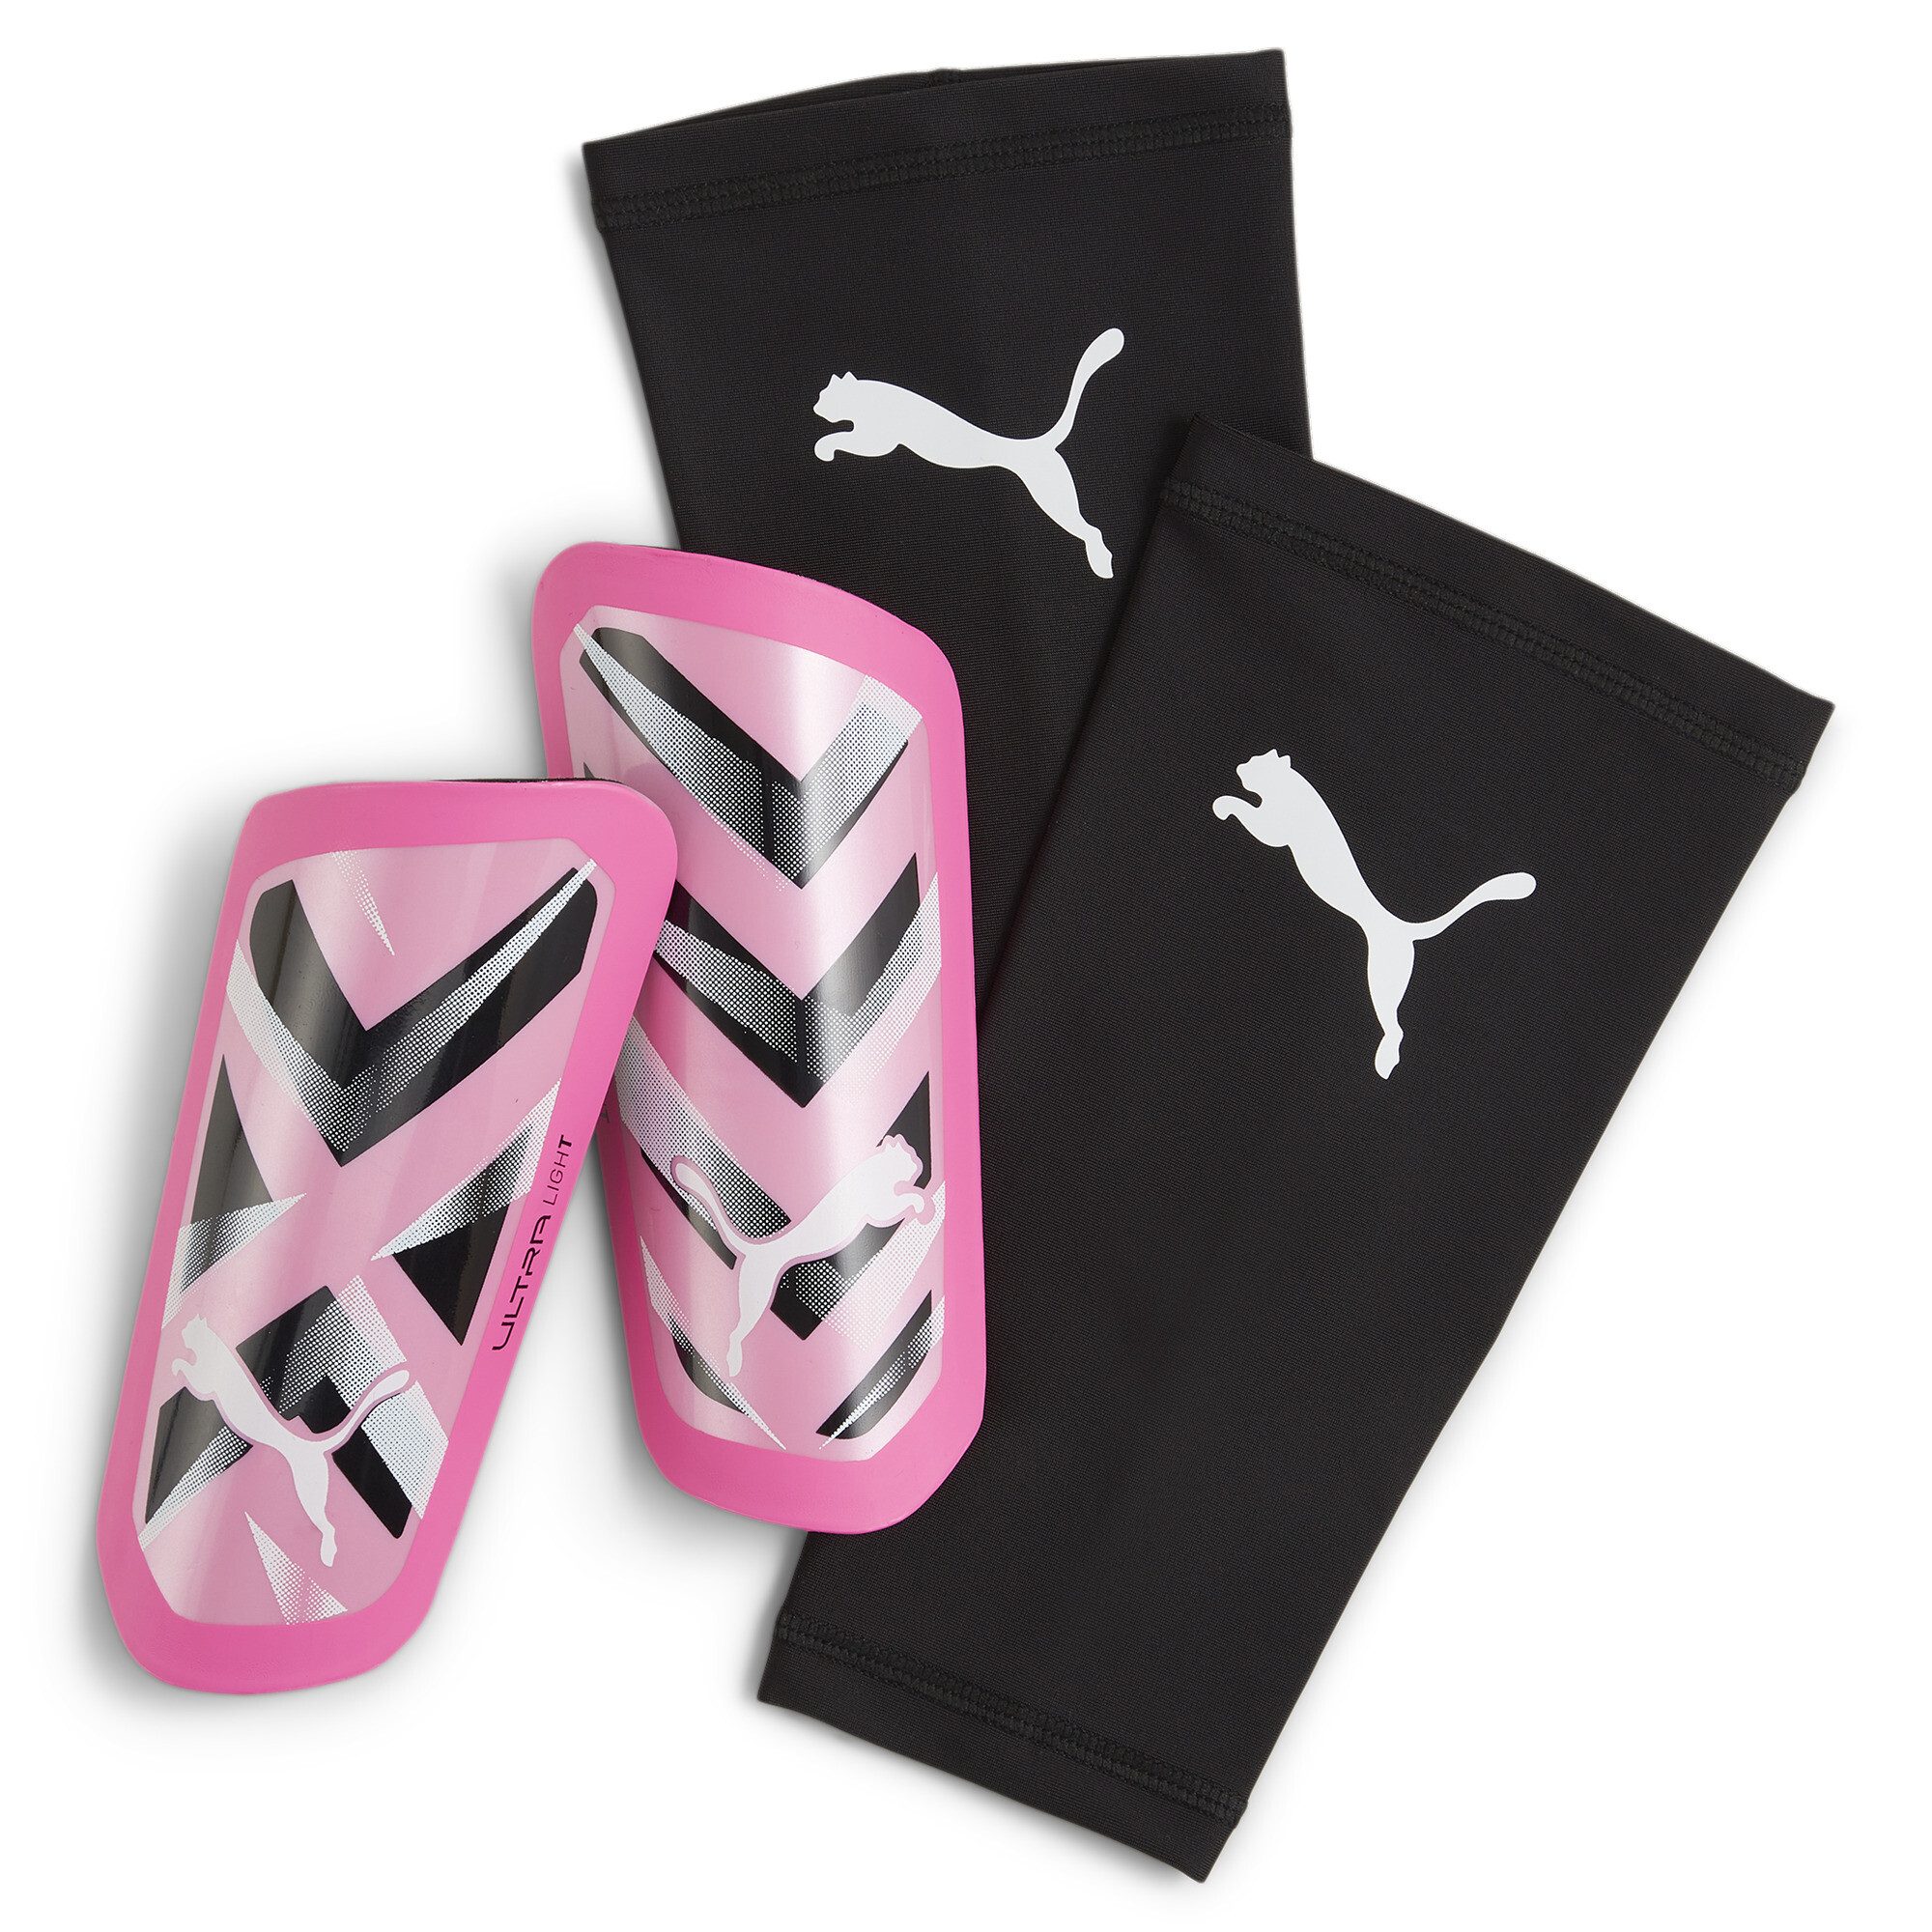 Puma ULTRA Light Sleeve Football Shin Guards, Pink, Size S, Accessories